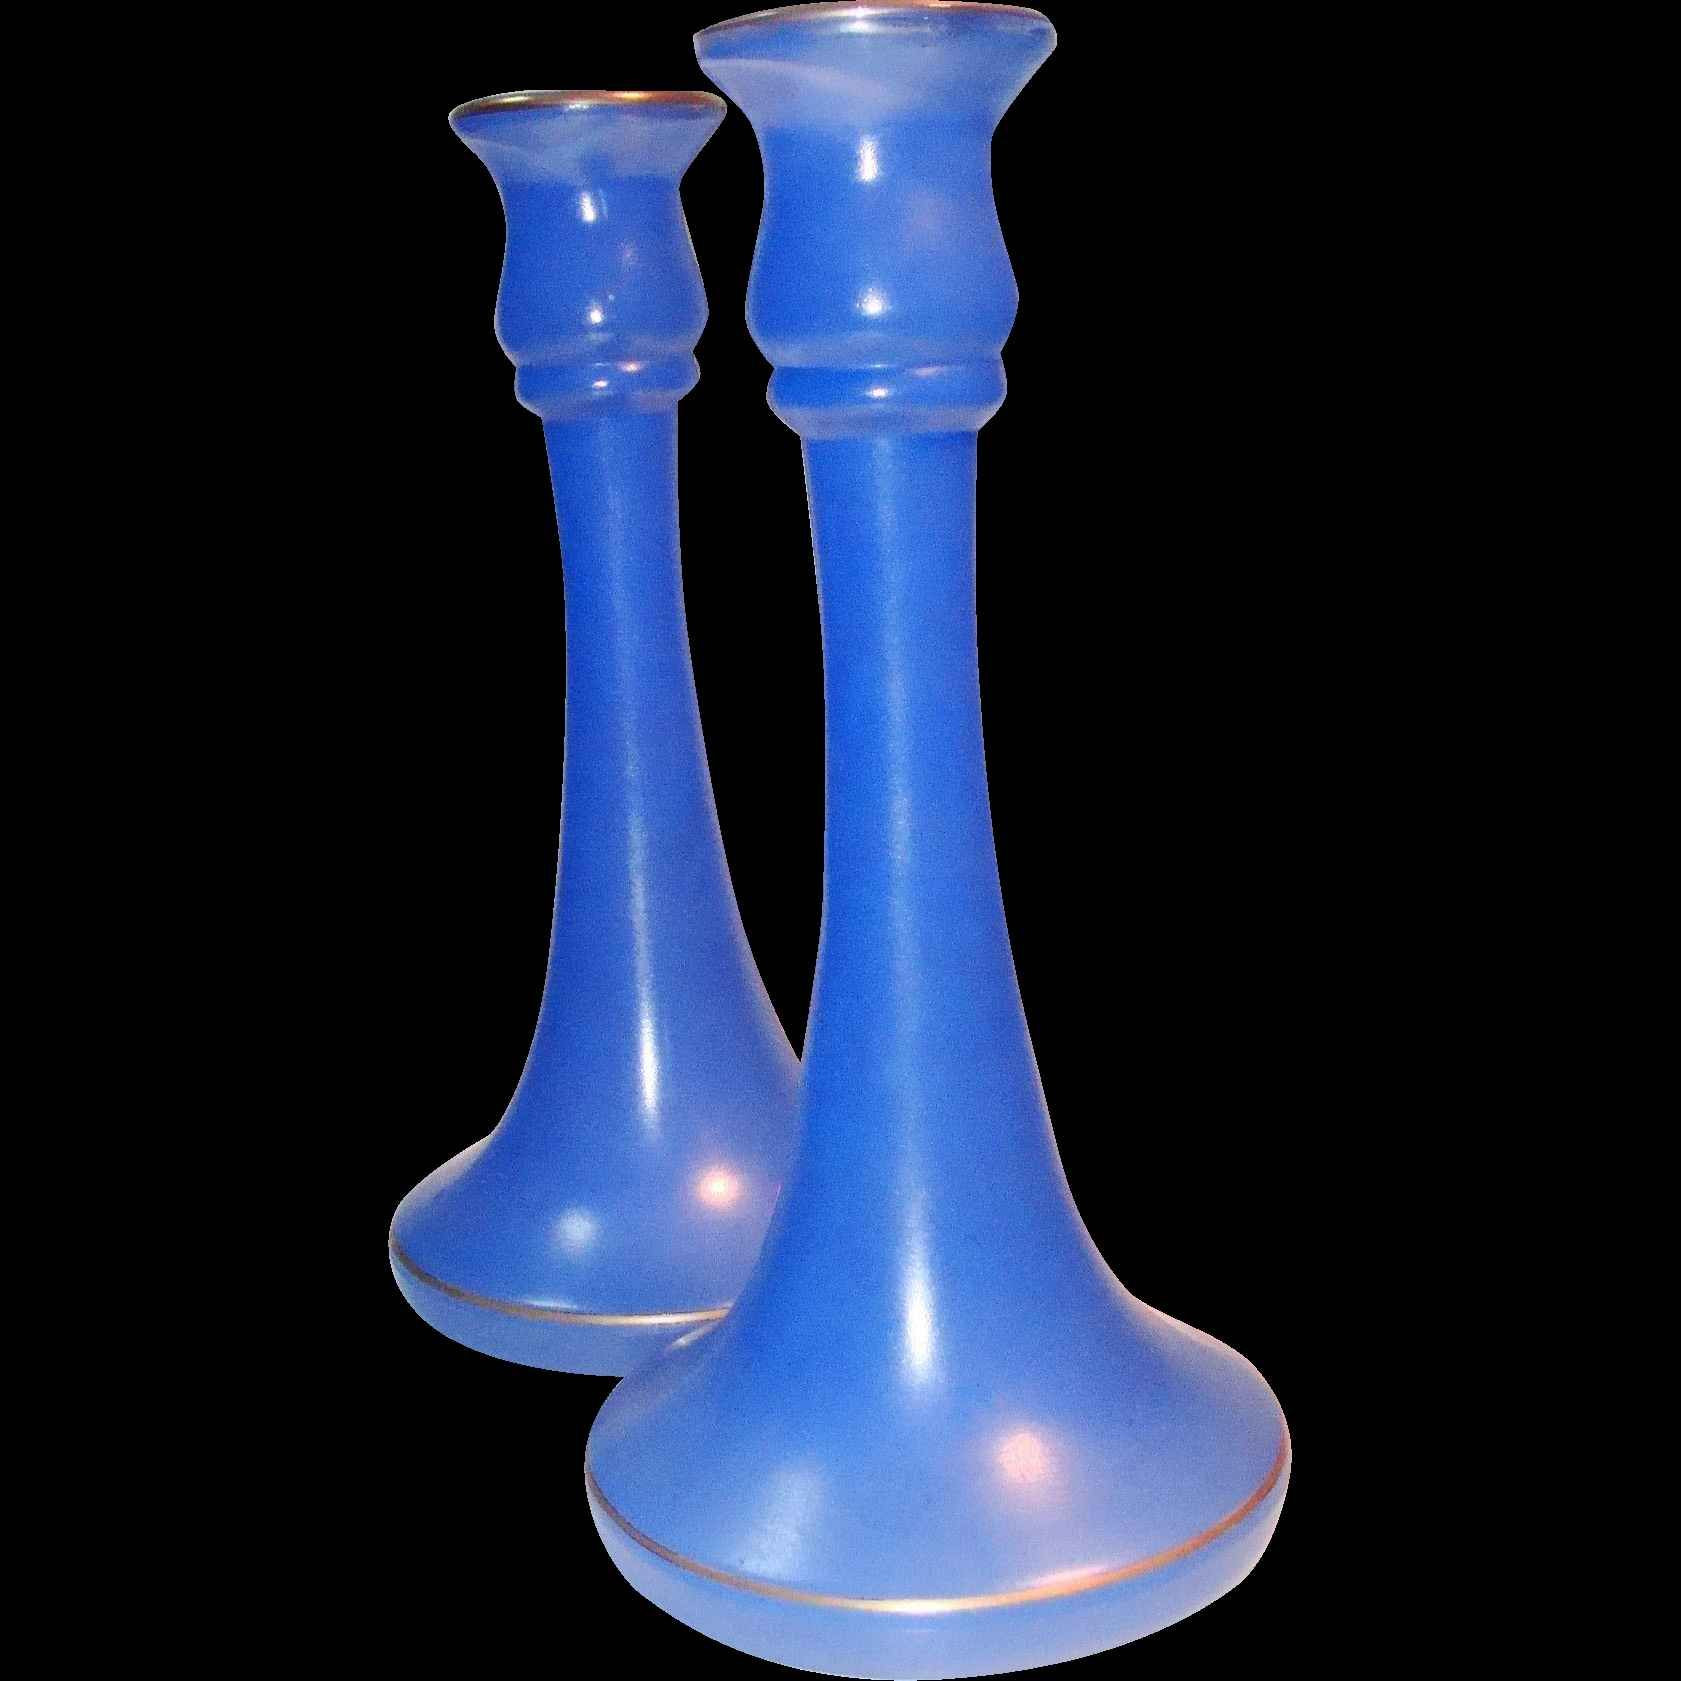 fenton glass vase prices of 37 fenton blue glass vase the weekly world intended for 37 fenton blue glass vase